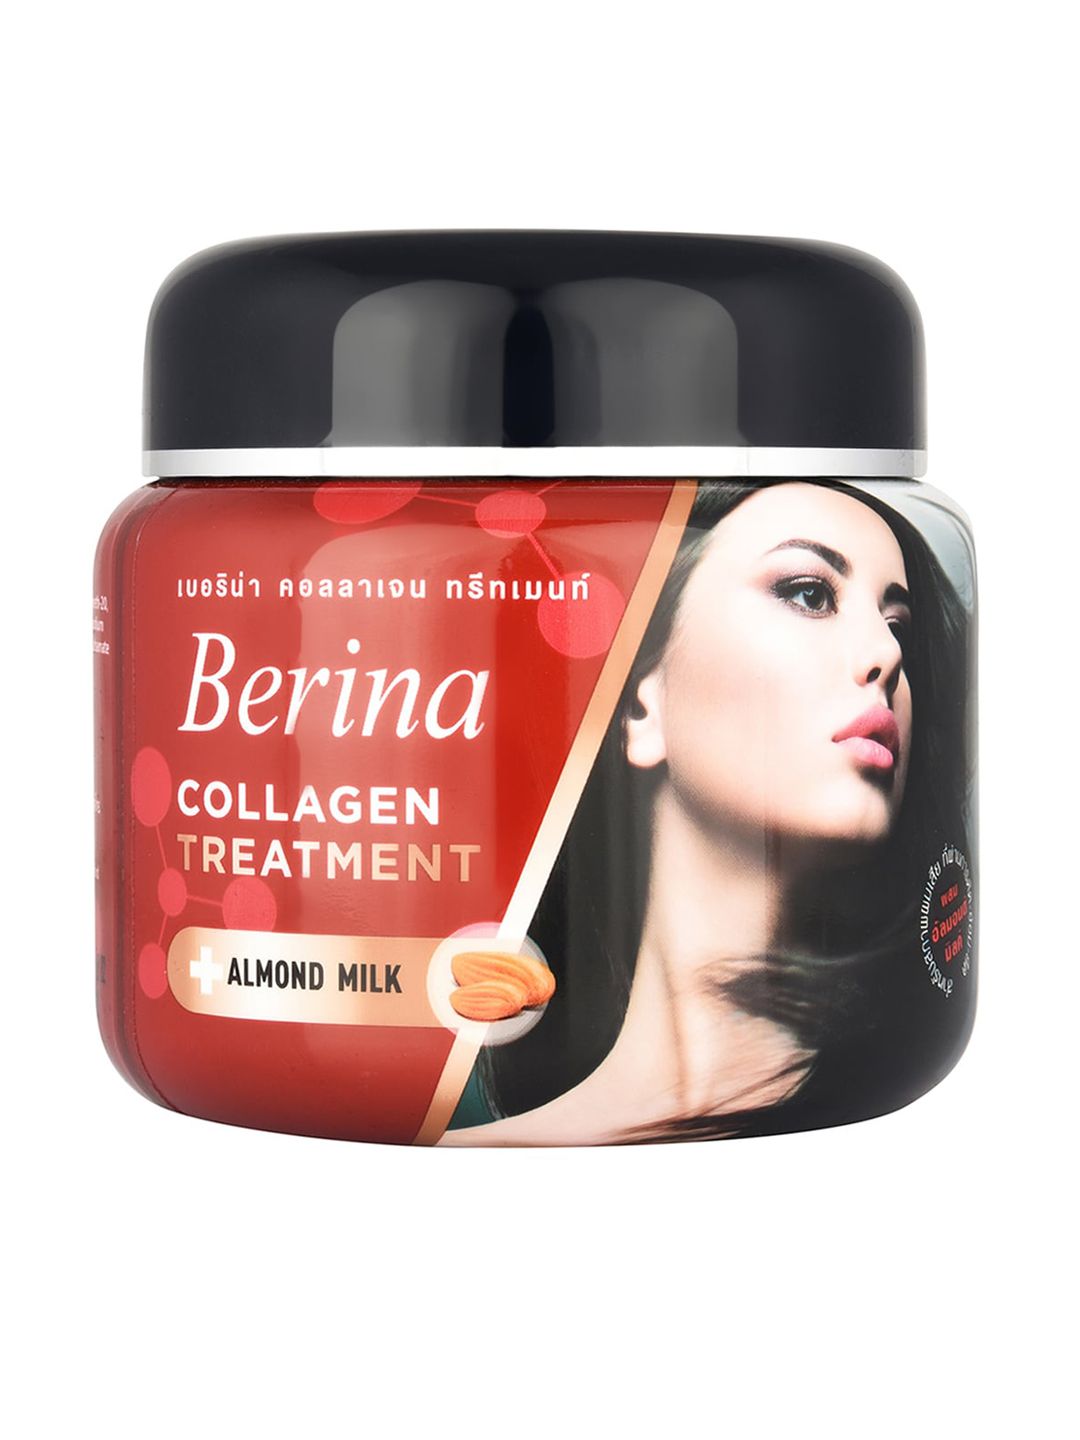 Berina Collagen Treatment Spa 500g Price in India